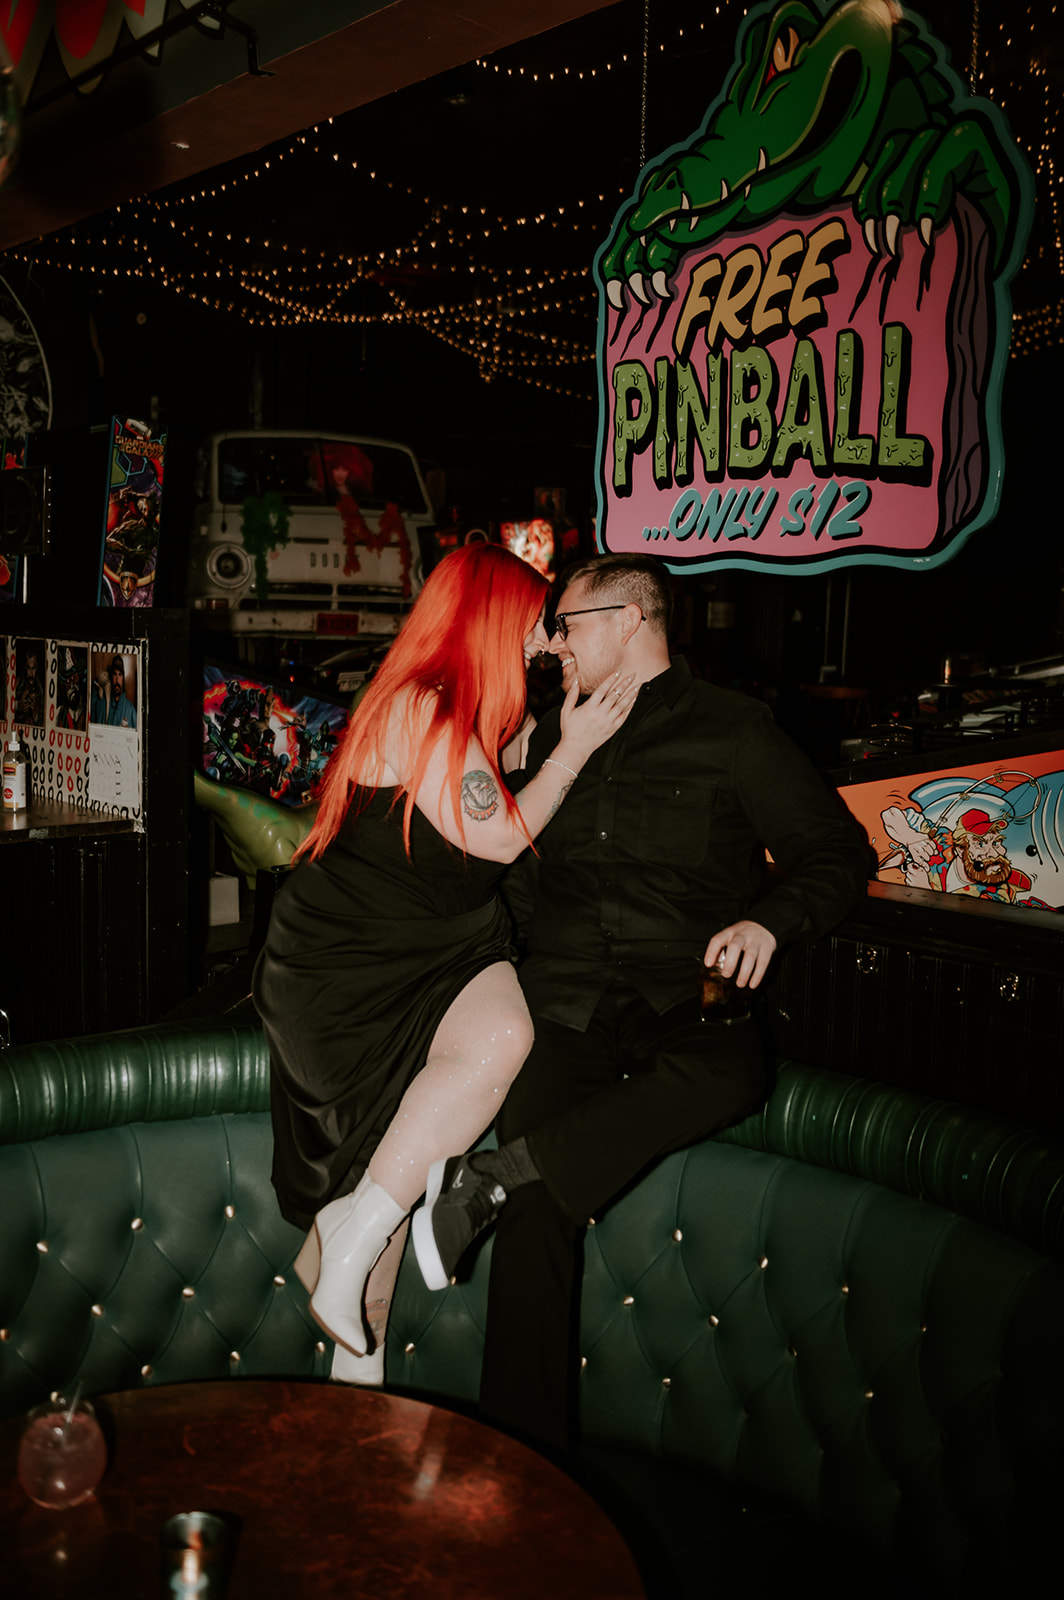 Pinball engagement photos at wedgehead bar in portland